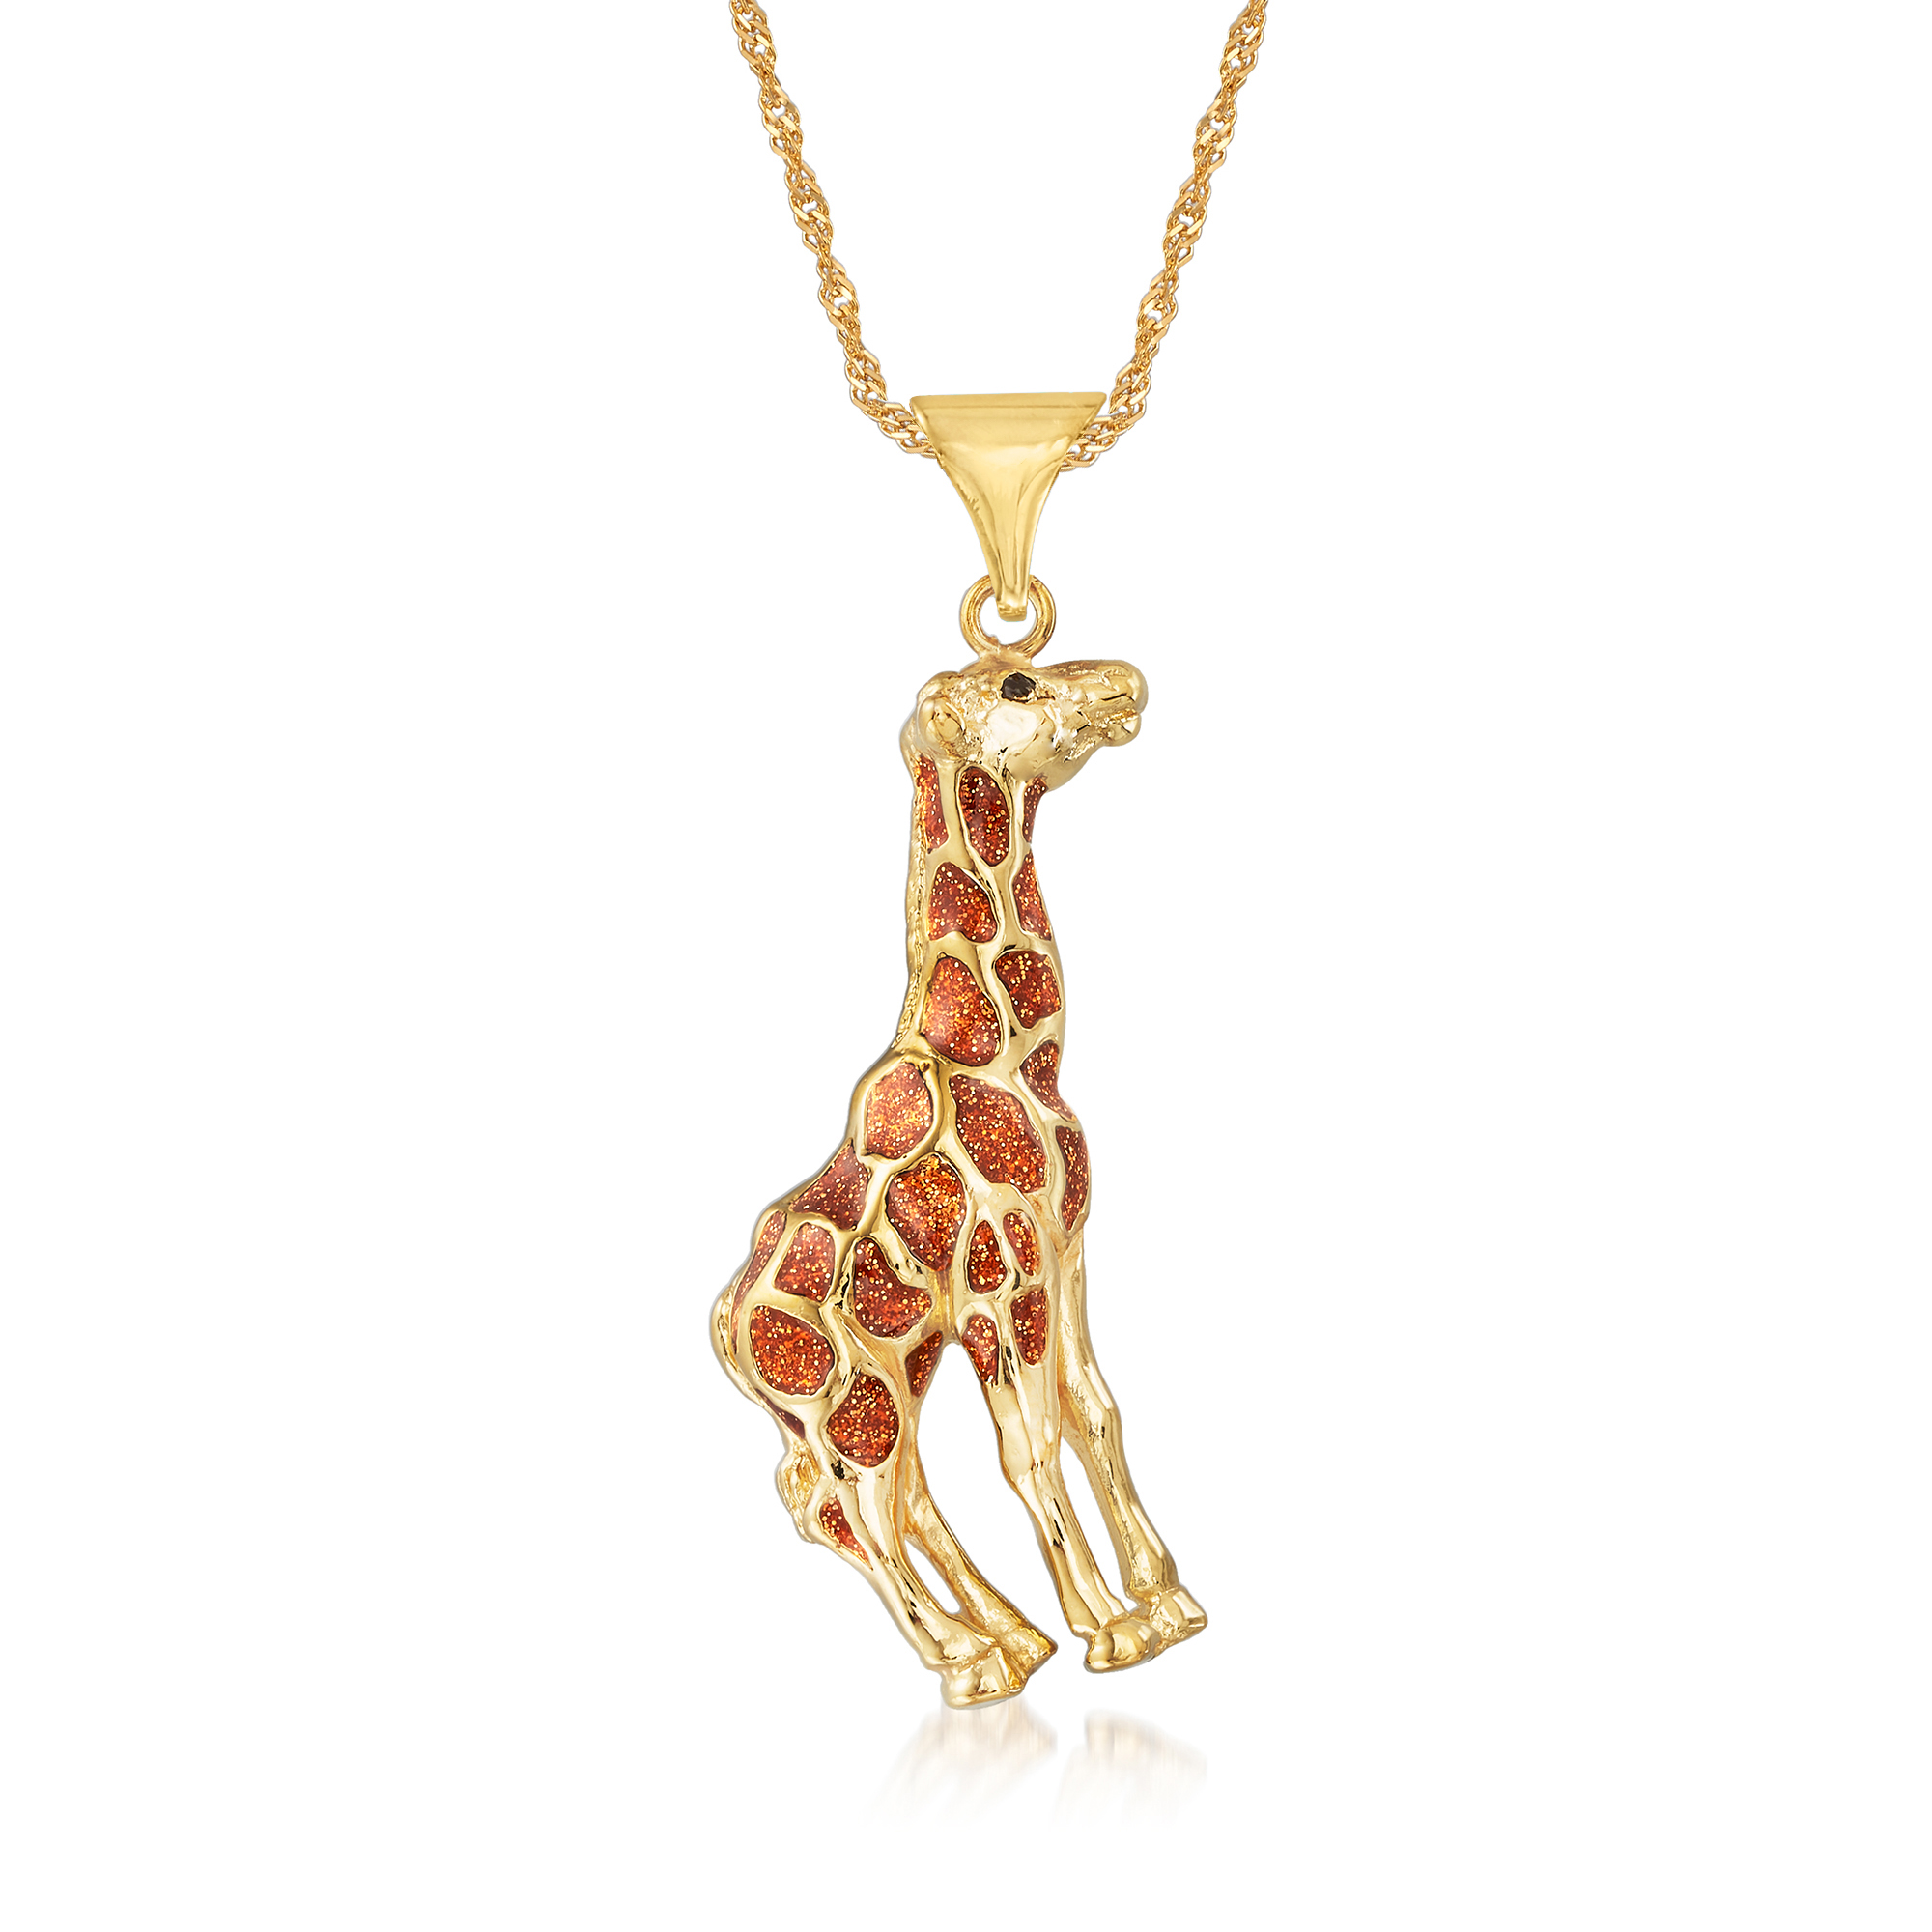 Jewel Tie 925 Sterling Silver Antiqued-Style Giraffes Pendant